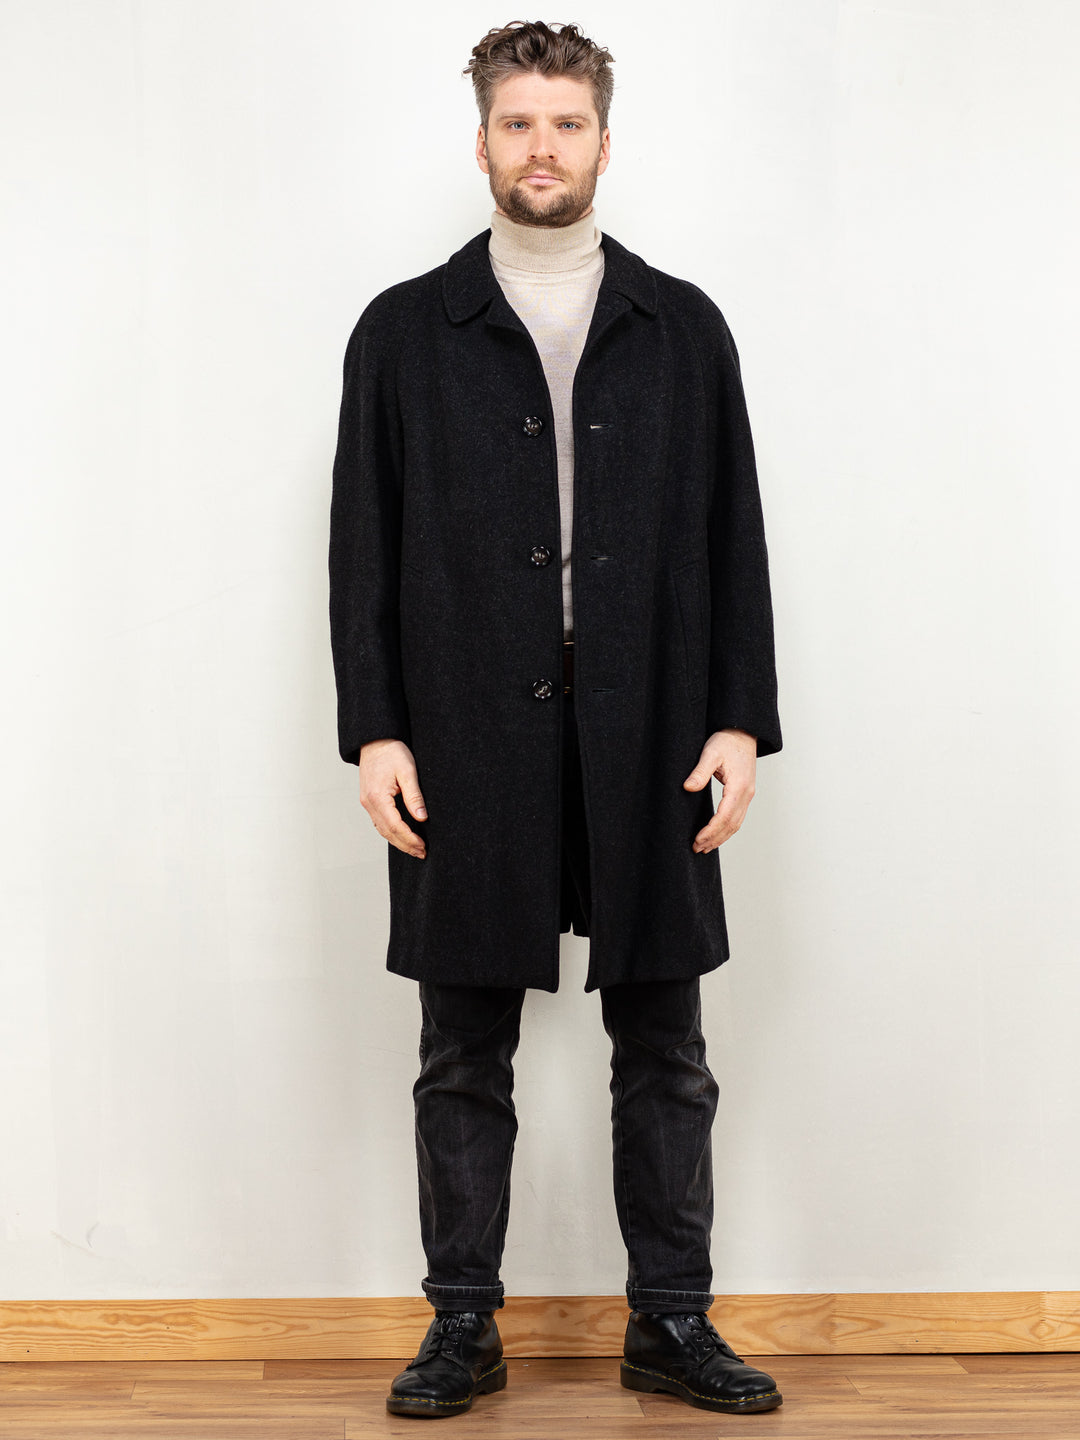 Men Wool Coat 90s black wool overcoat classy vintage men coat 90s classic men minimalistic preppy style sustainable outerwear size large L